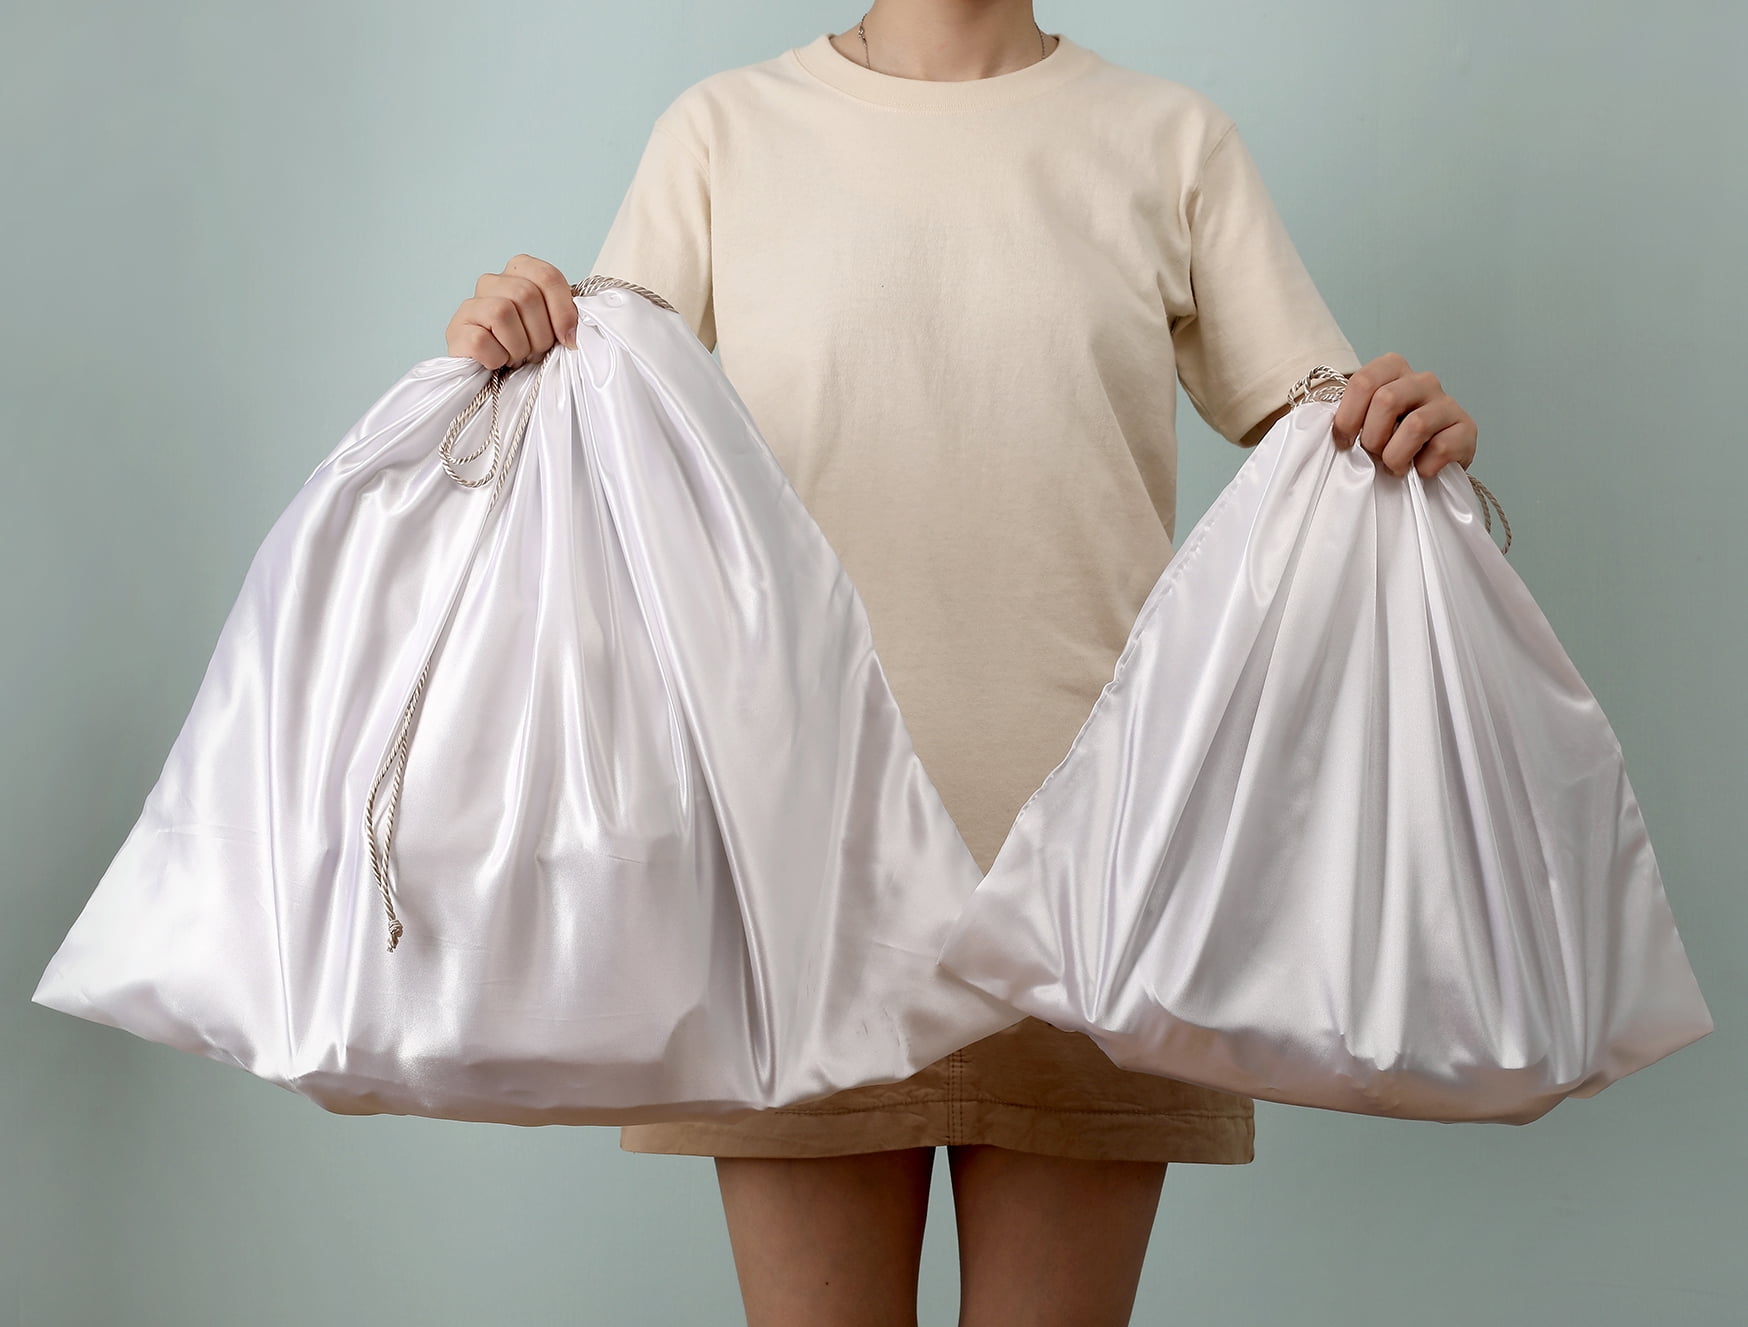 Cptoion 6 Pack Dust Bags for Handbags,Dust Cover Storage Bags Silk  Dustproof Drawstring Bag,Silk Dust Cover Bag for Handbags Purses Clothes  Shoes